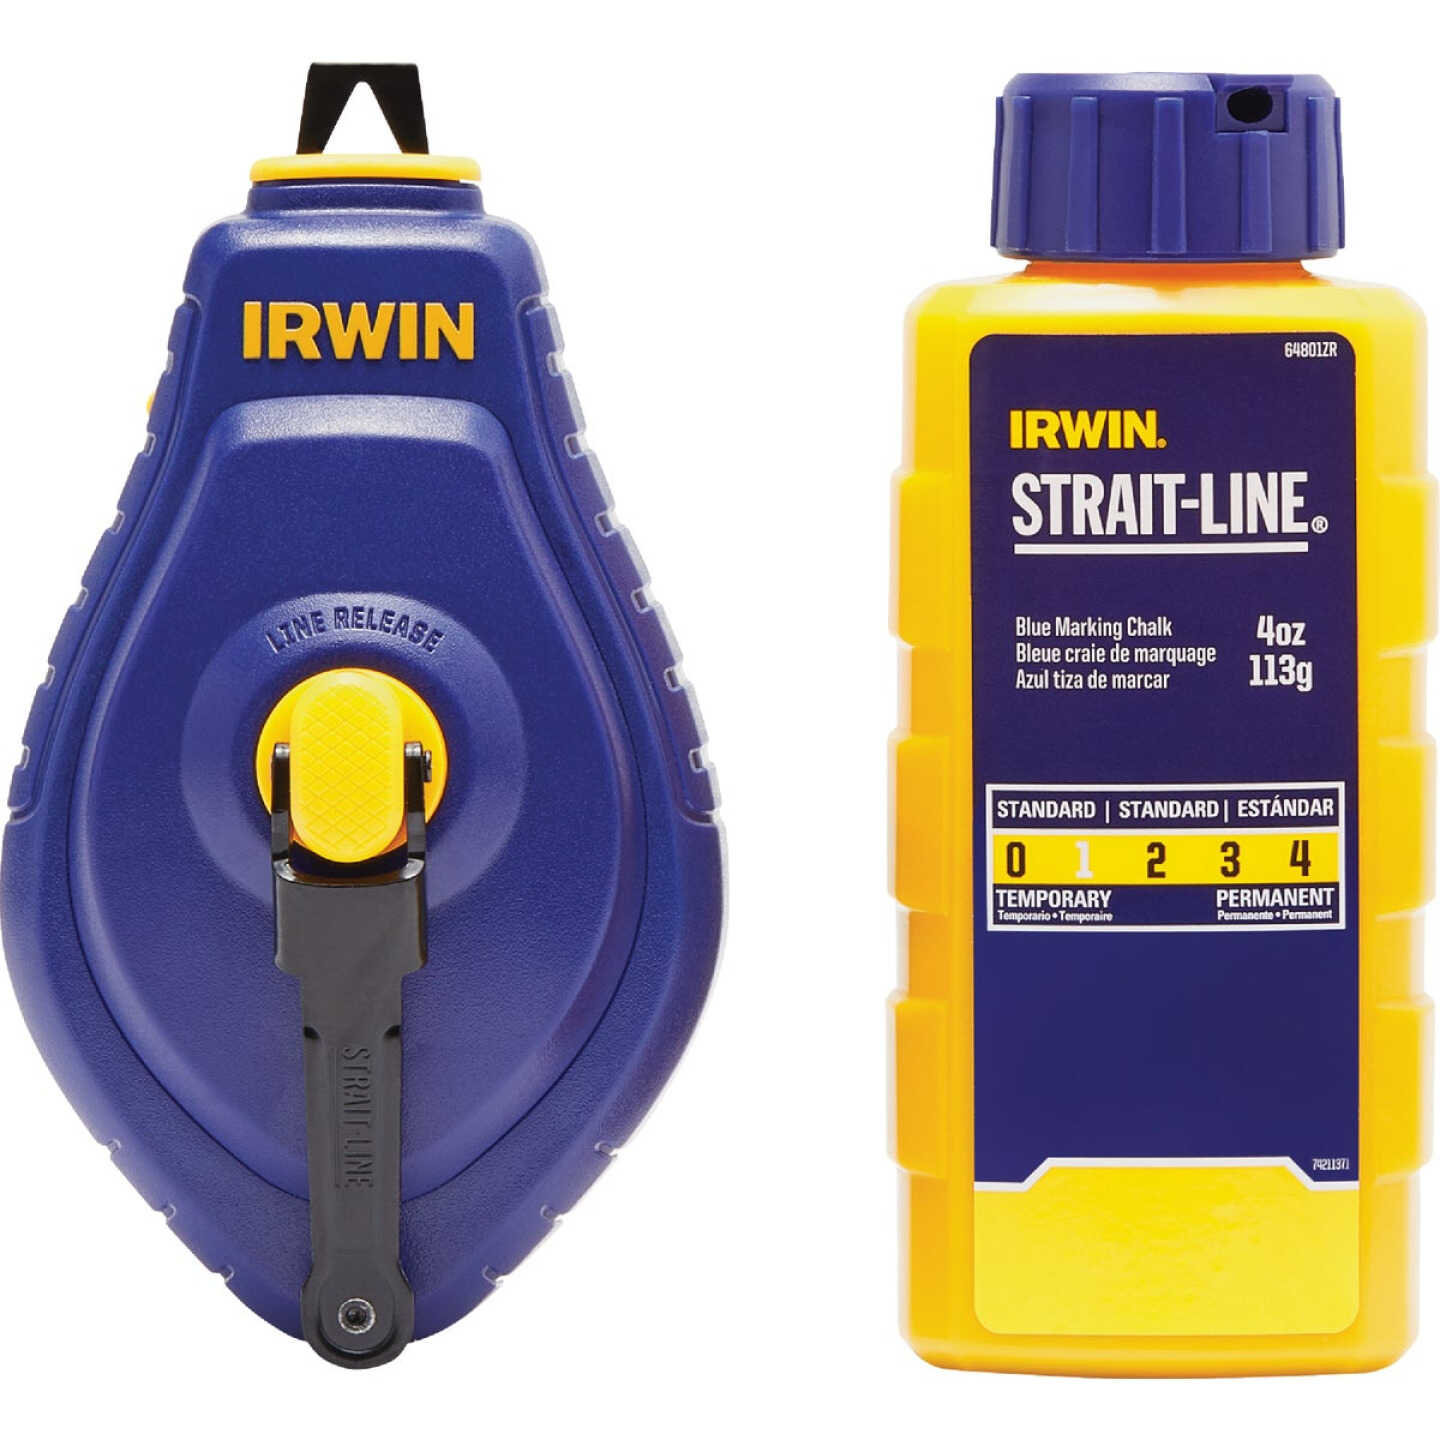 Irwin Strait-Line 5 lb. Blue Marking Chalk